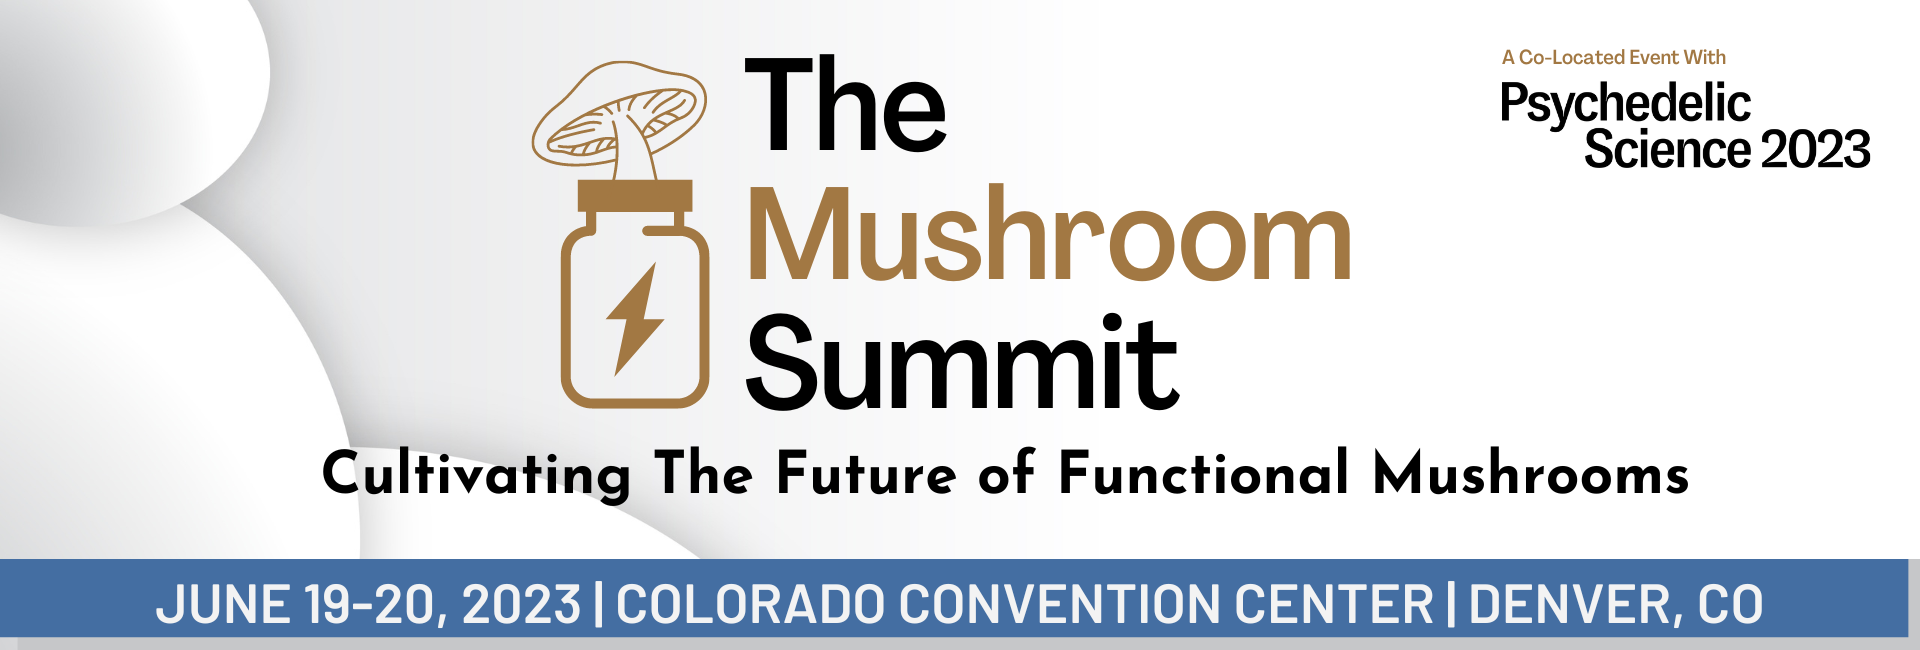 Banner of The Mushroom Summit